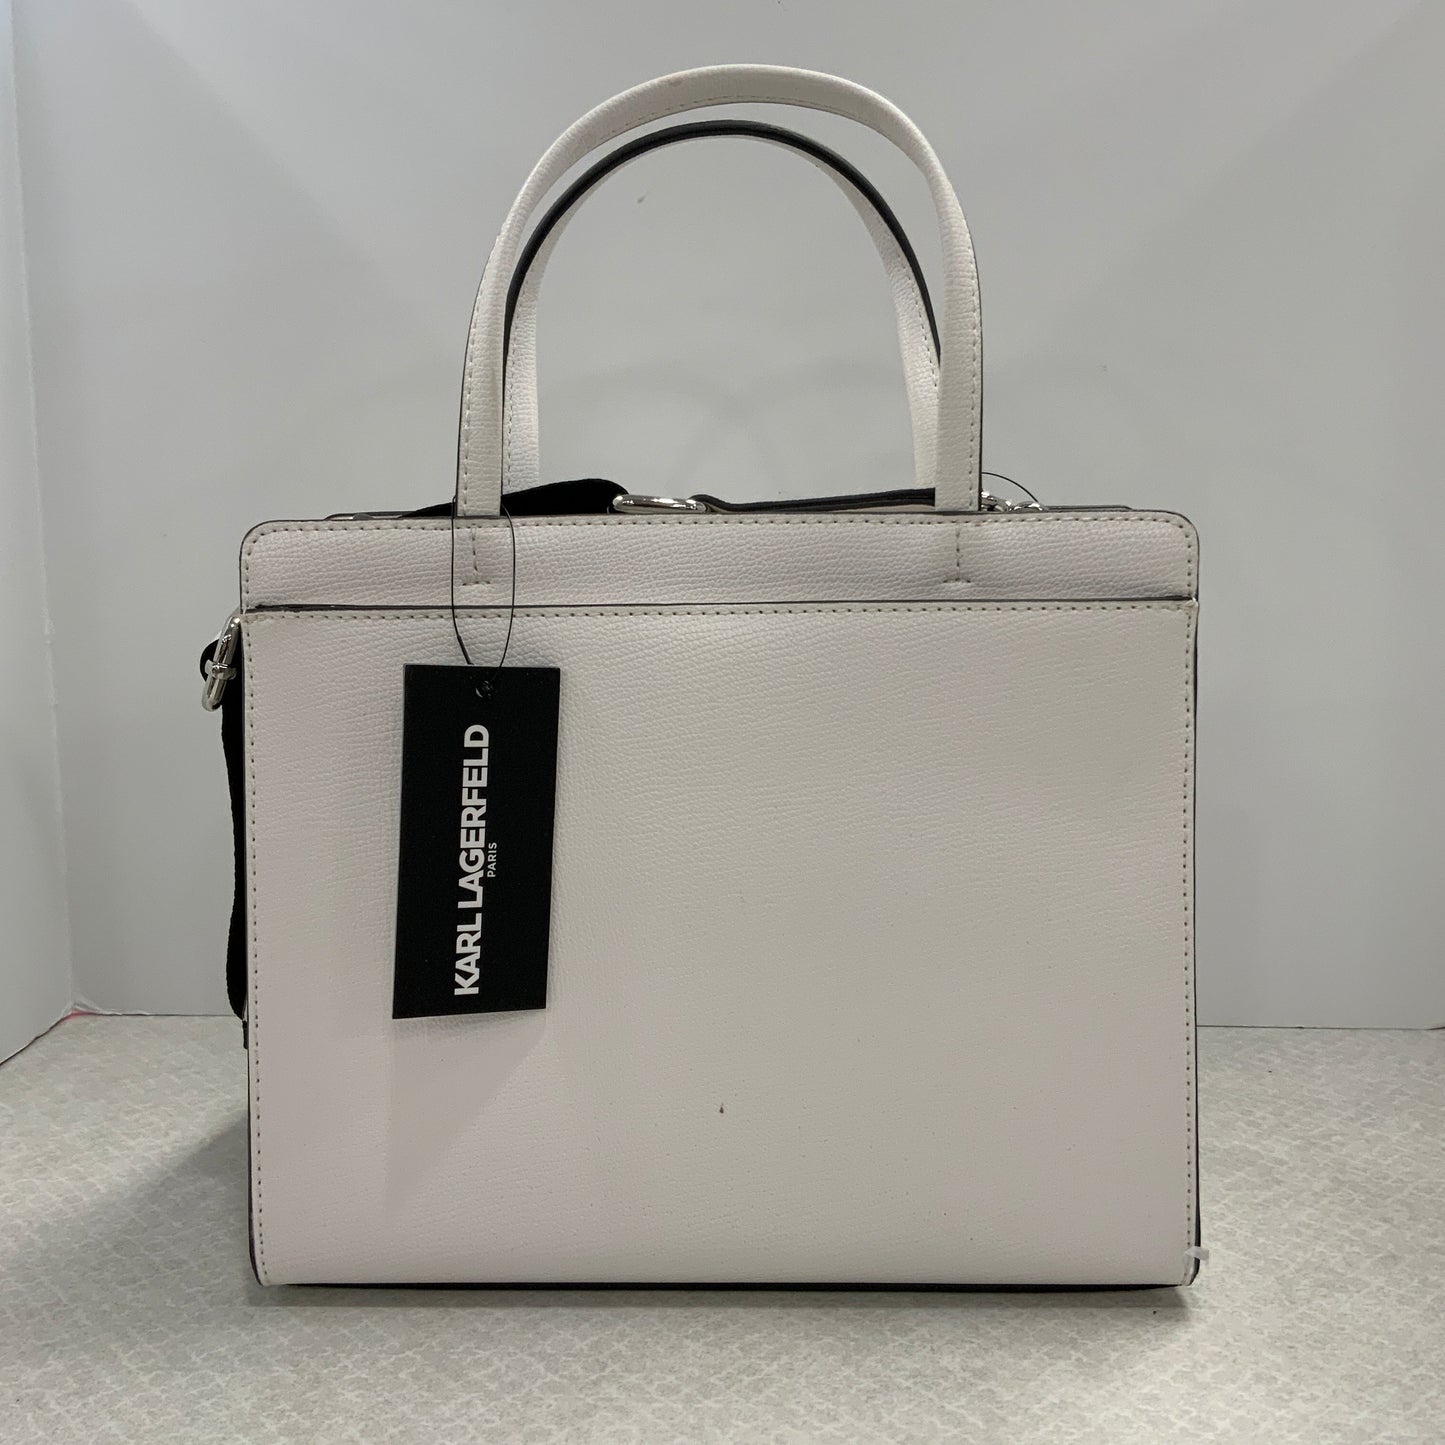 Handbag Karl Lagerfeld, Size Large